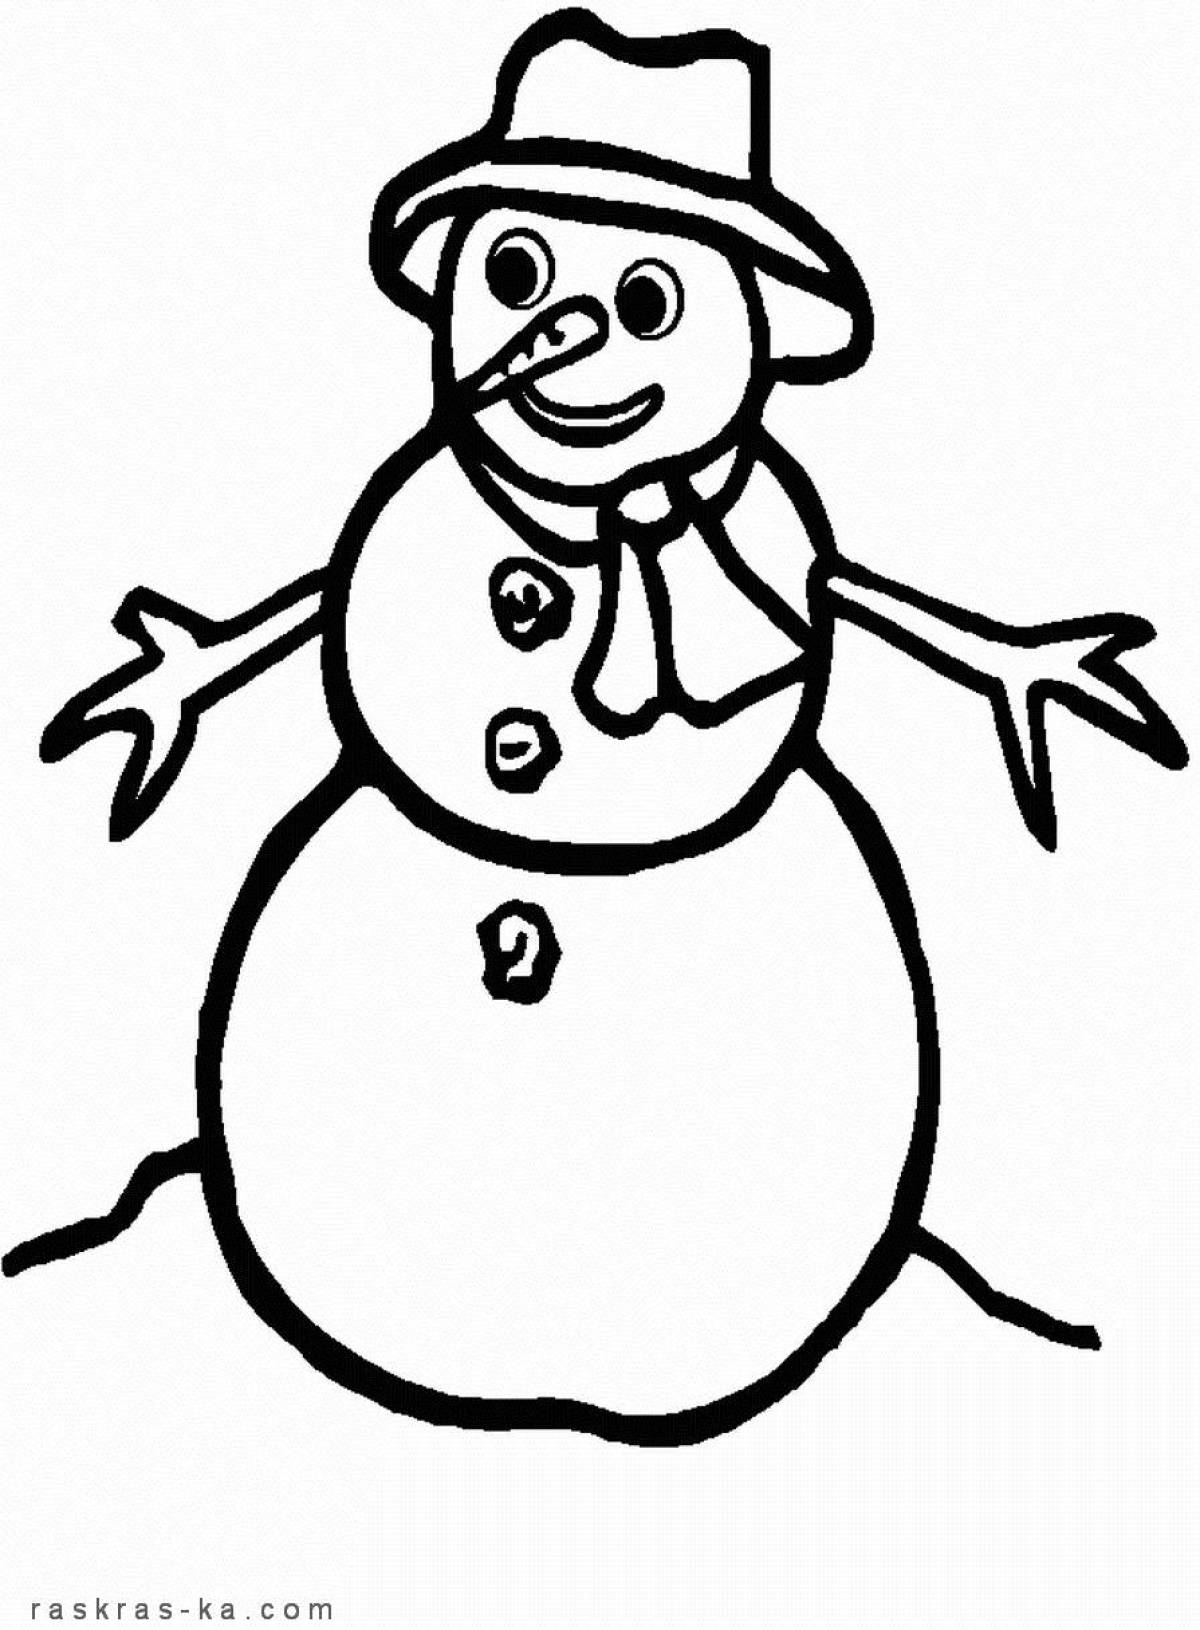 Snowman for kids #12